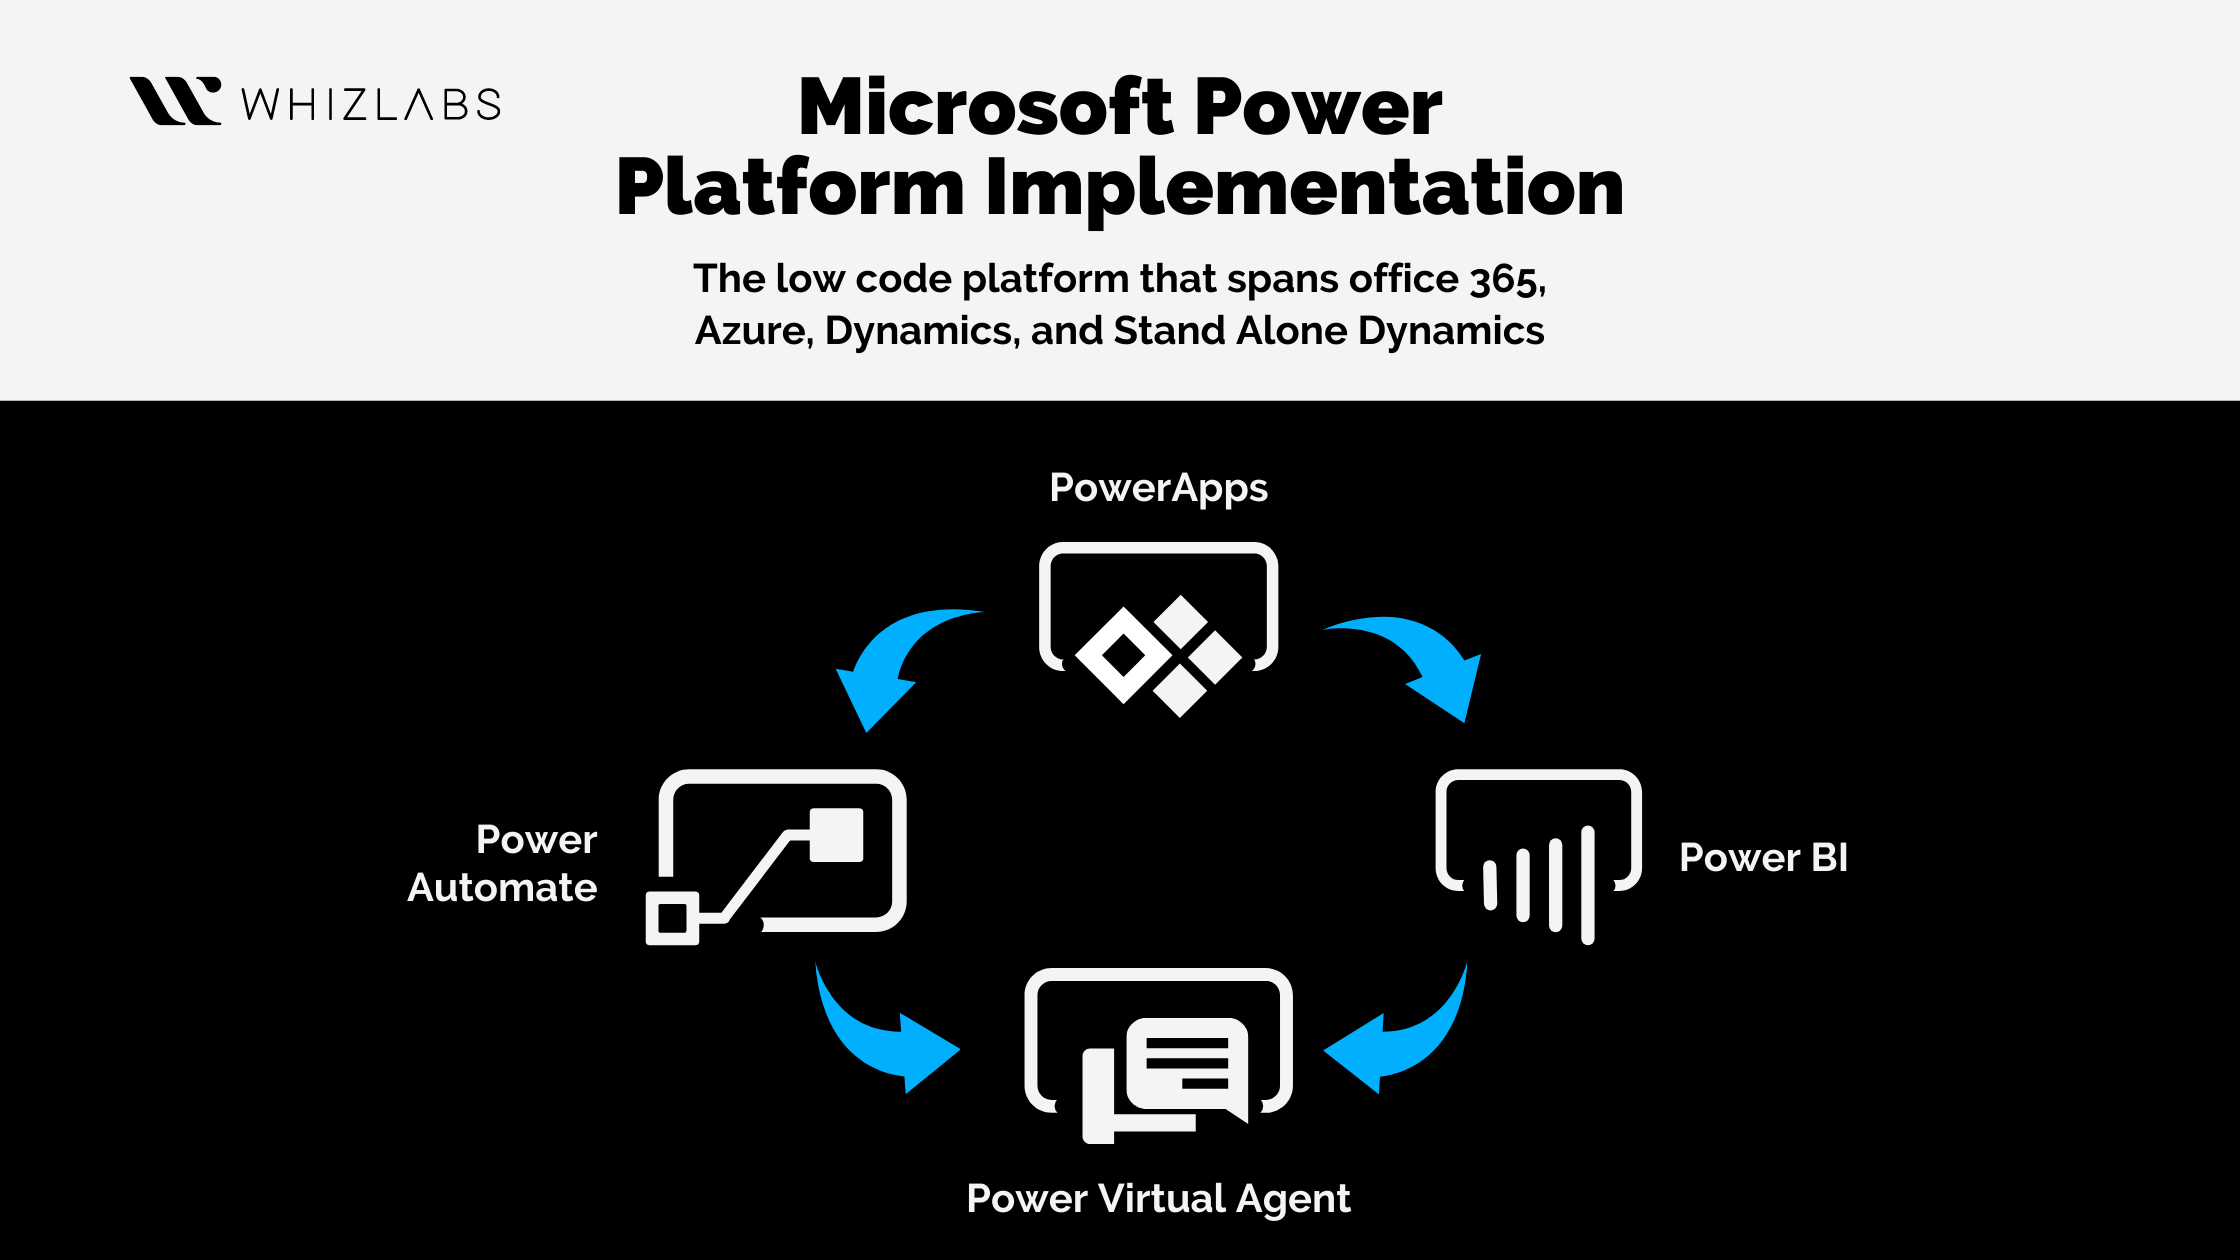 Microsoft Power Platform Implementation